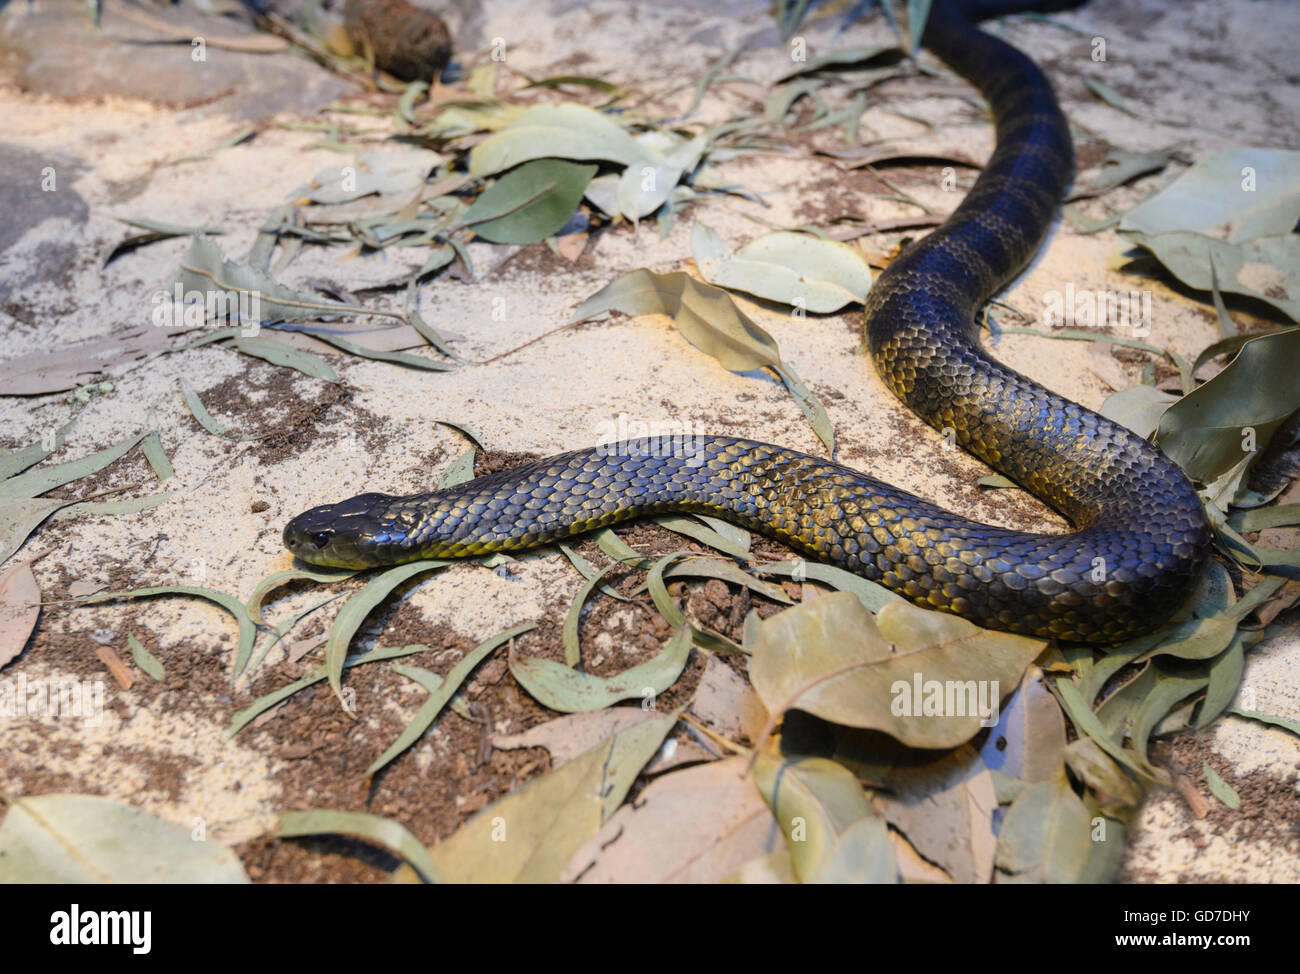 Tiger Snake (Notechis scutatus), Australia Stock Photo